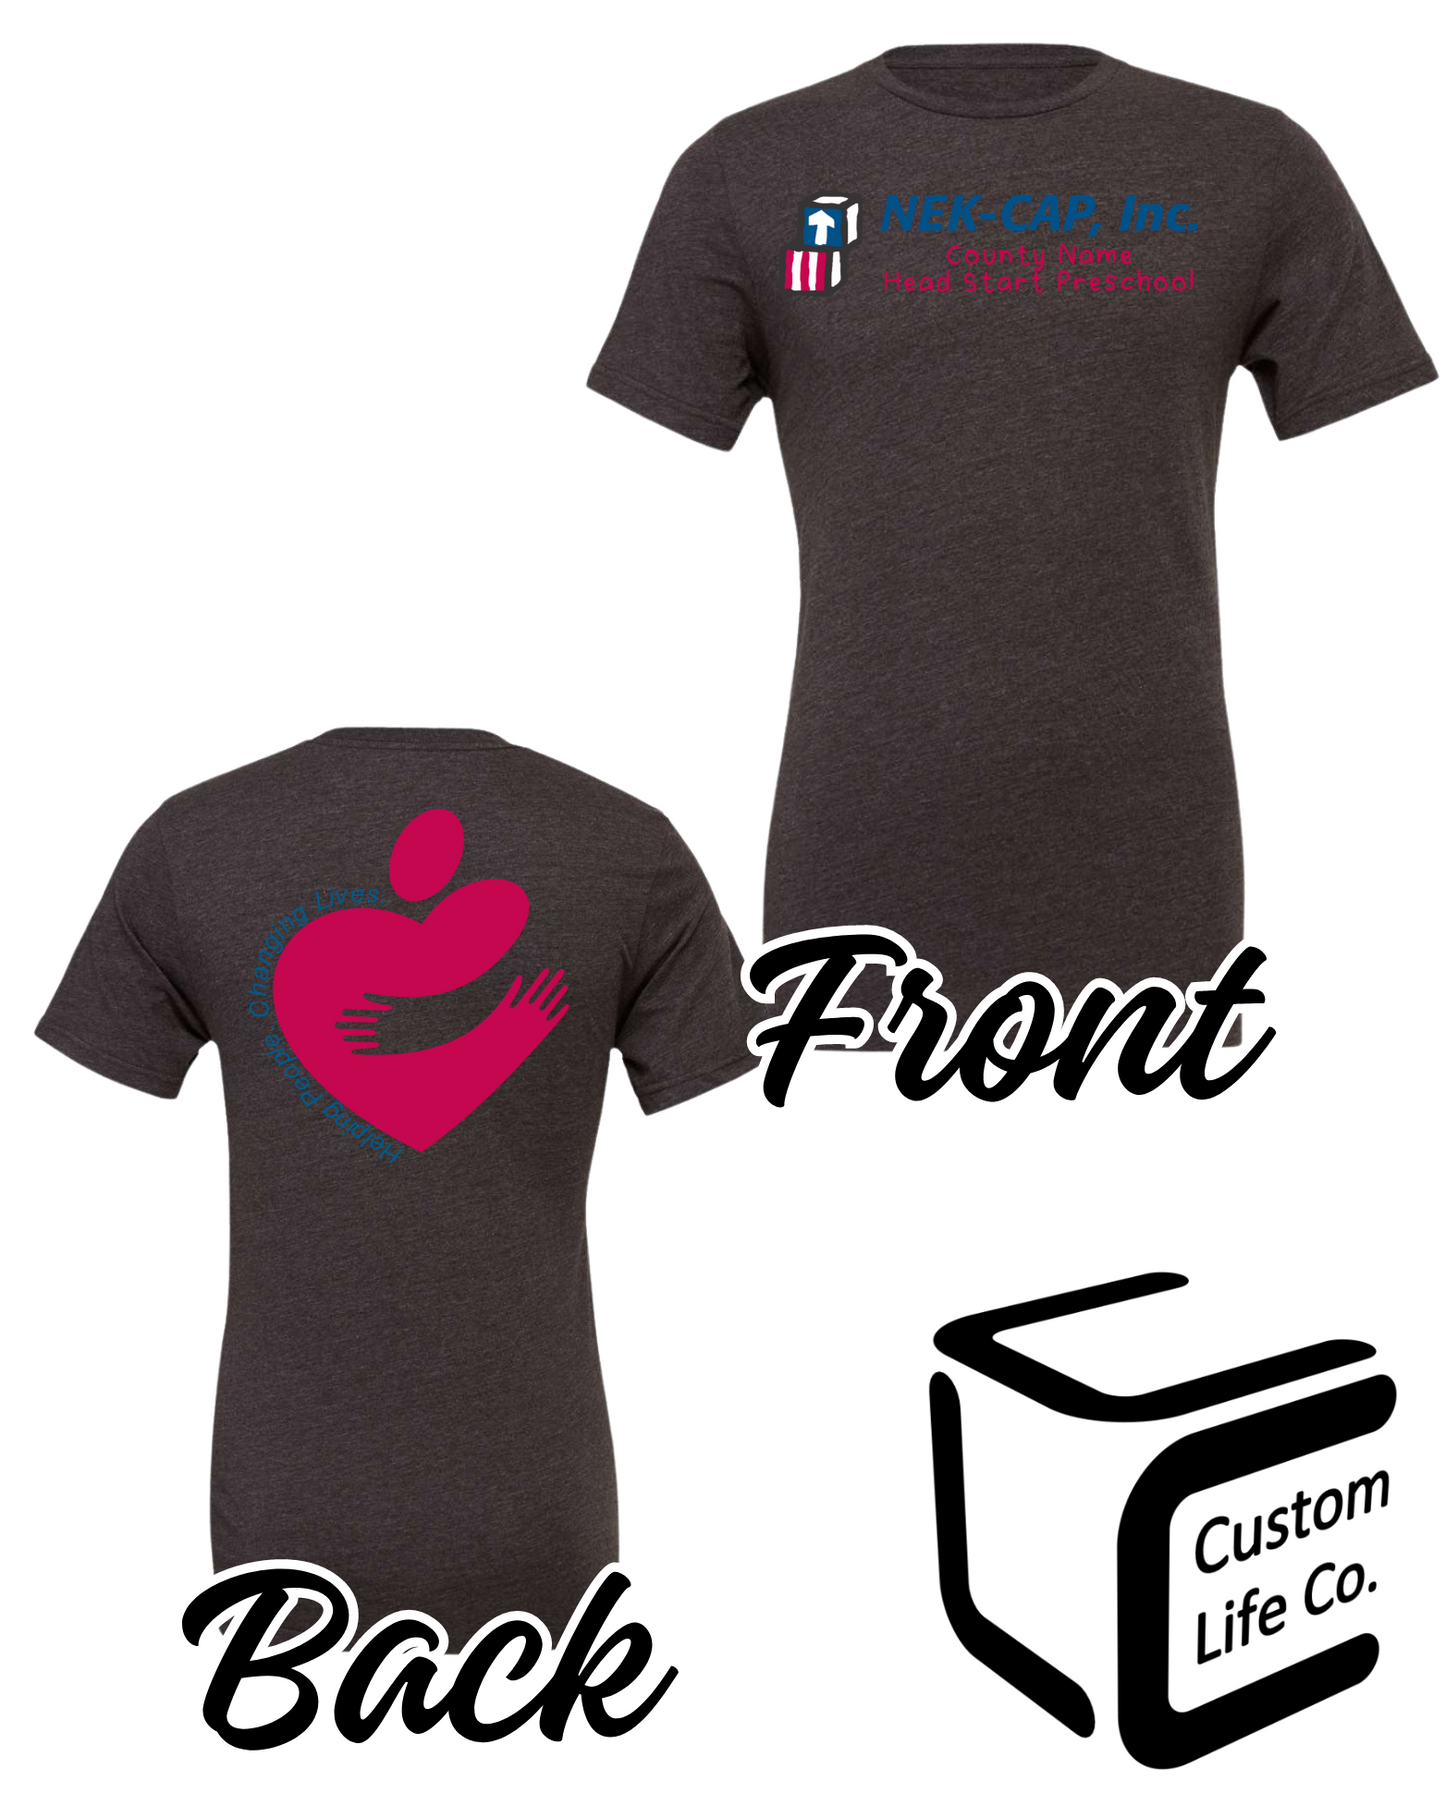 Pottawatomie Co. Head Start Preschool with Heart Adult T-Shirt